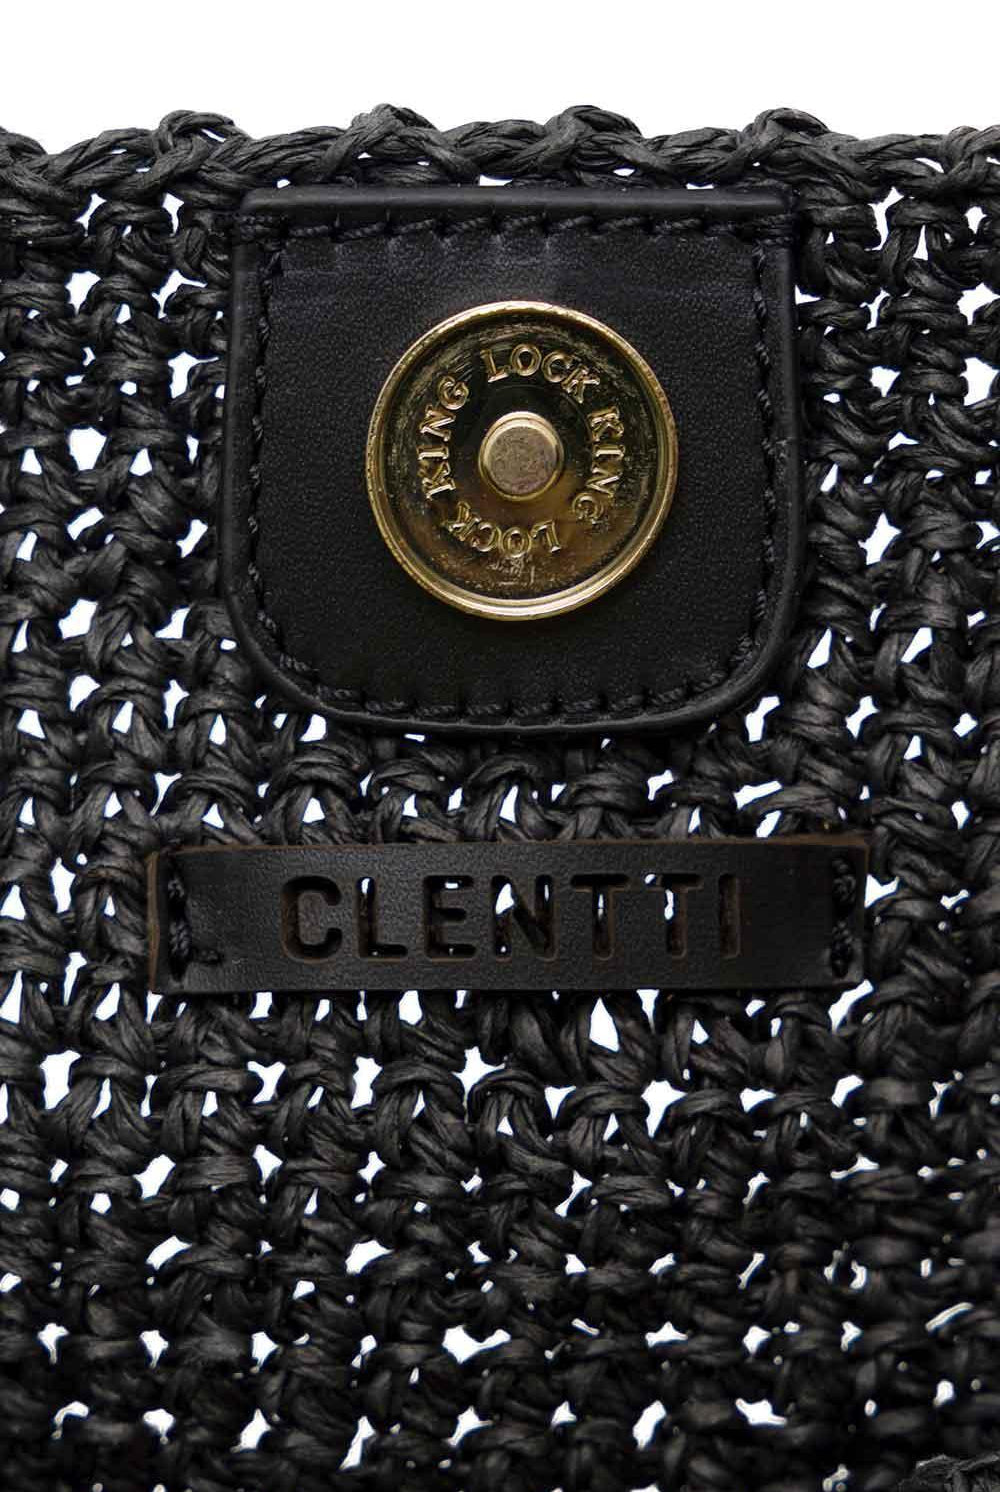 Clentti | Basic Bag Black 4 |Milagron